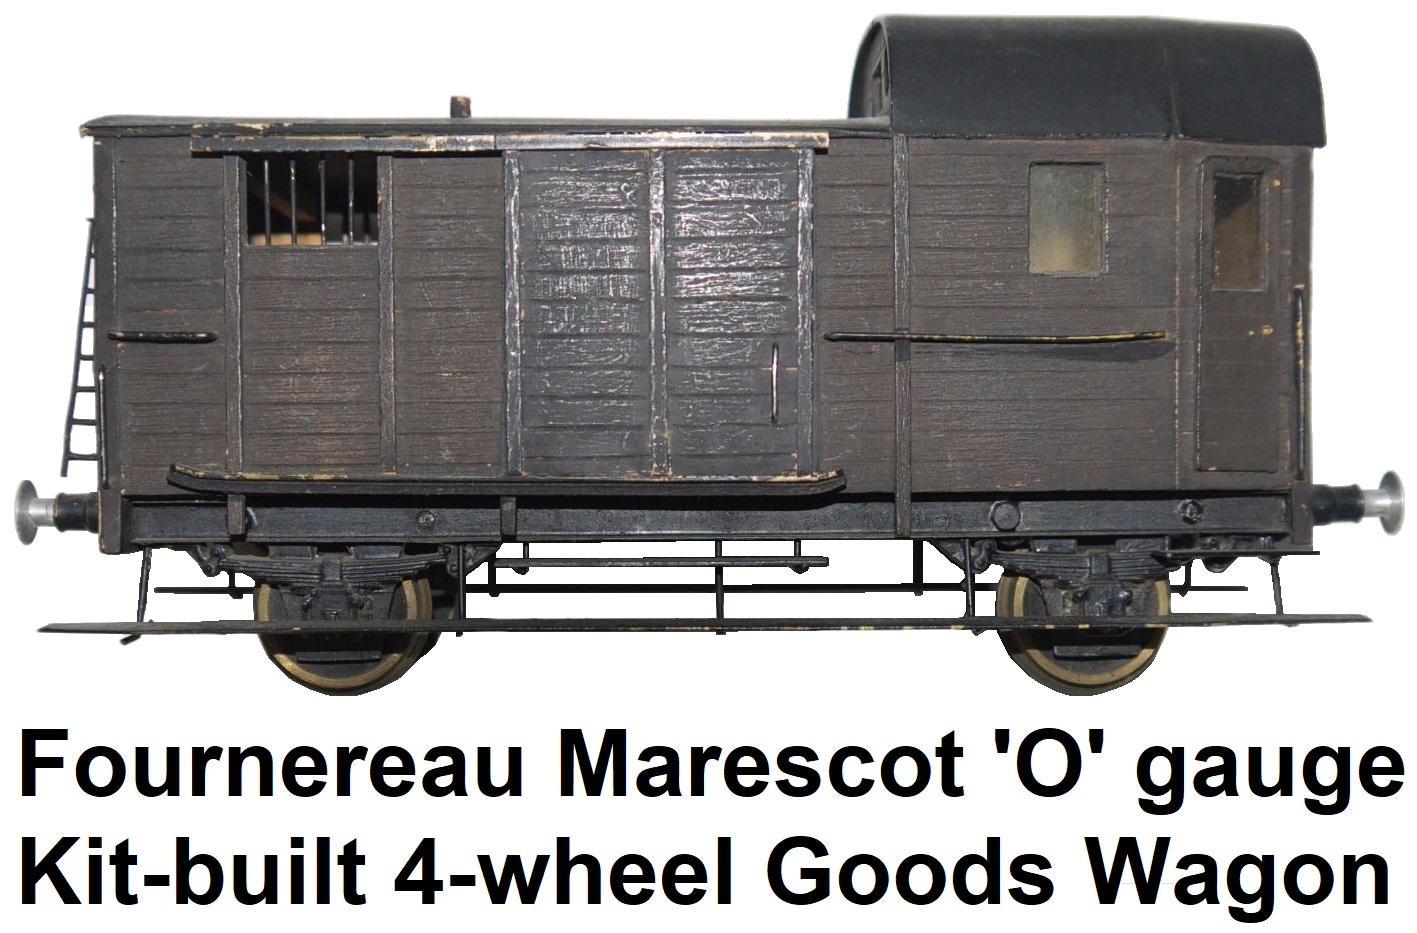 Fournereau Marescot 'O' gauge 4-wheel closed goods wagon